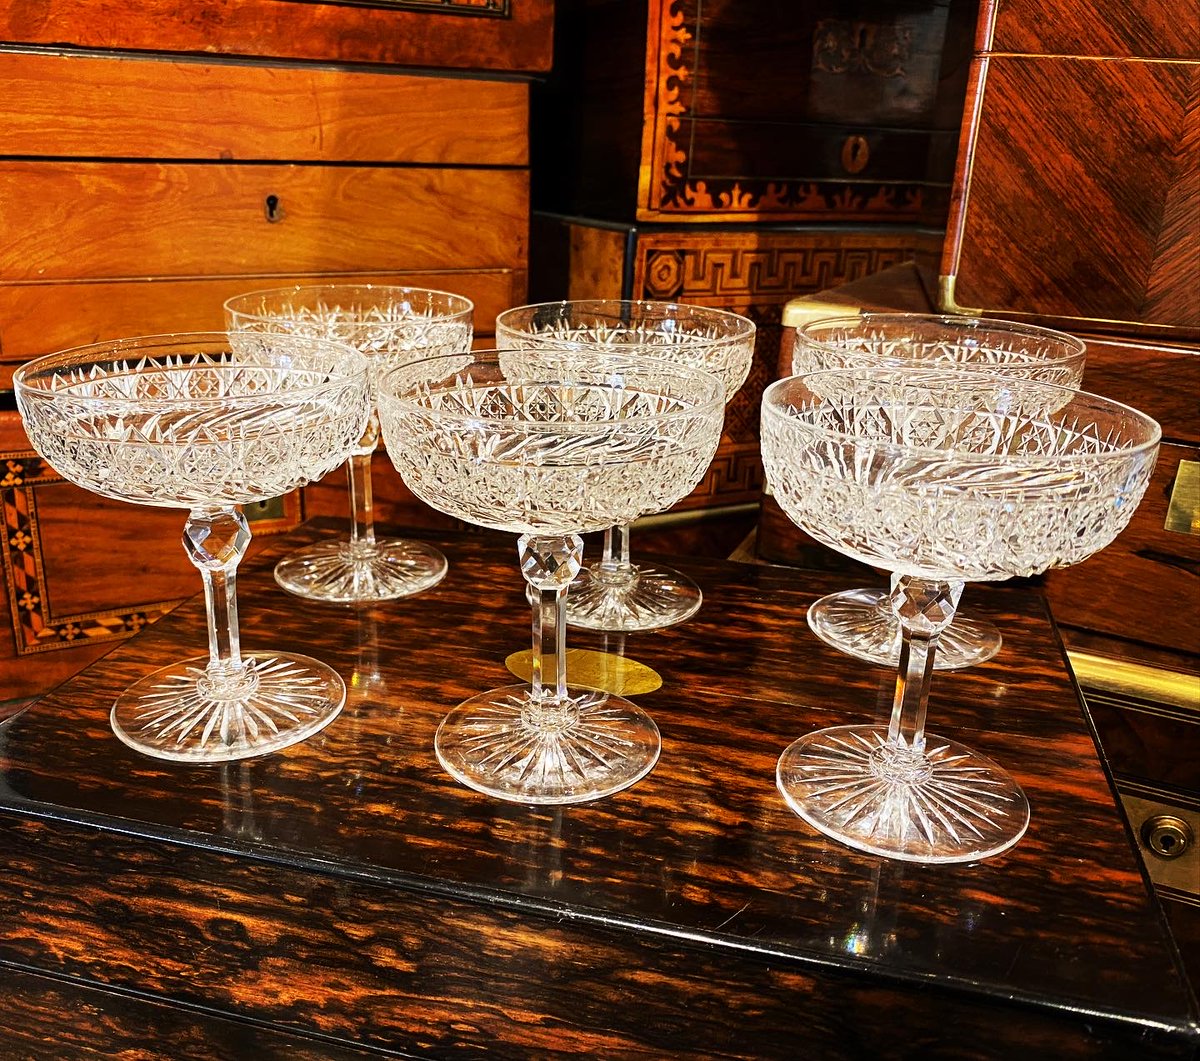 Stunning set of English 1920’s crystal champagne glasses. £290 for set of 6. #champagneglasses #vintagechampagneglasses #vintagechampagneglass #chanpagnedrinker #champagne #antiquechampagneglass #antiquechampagneglasses #englishcrystal #portobelloroad #barhamantiques